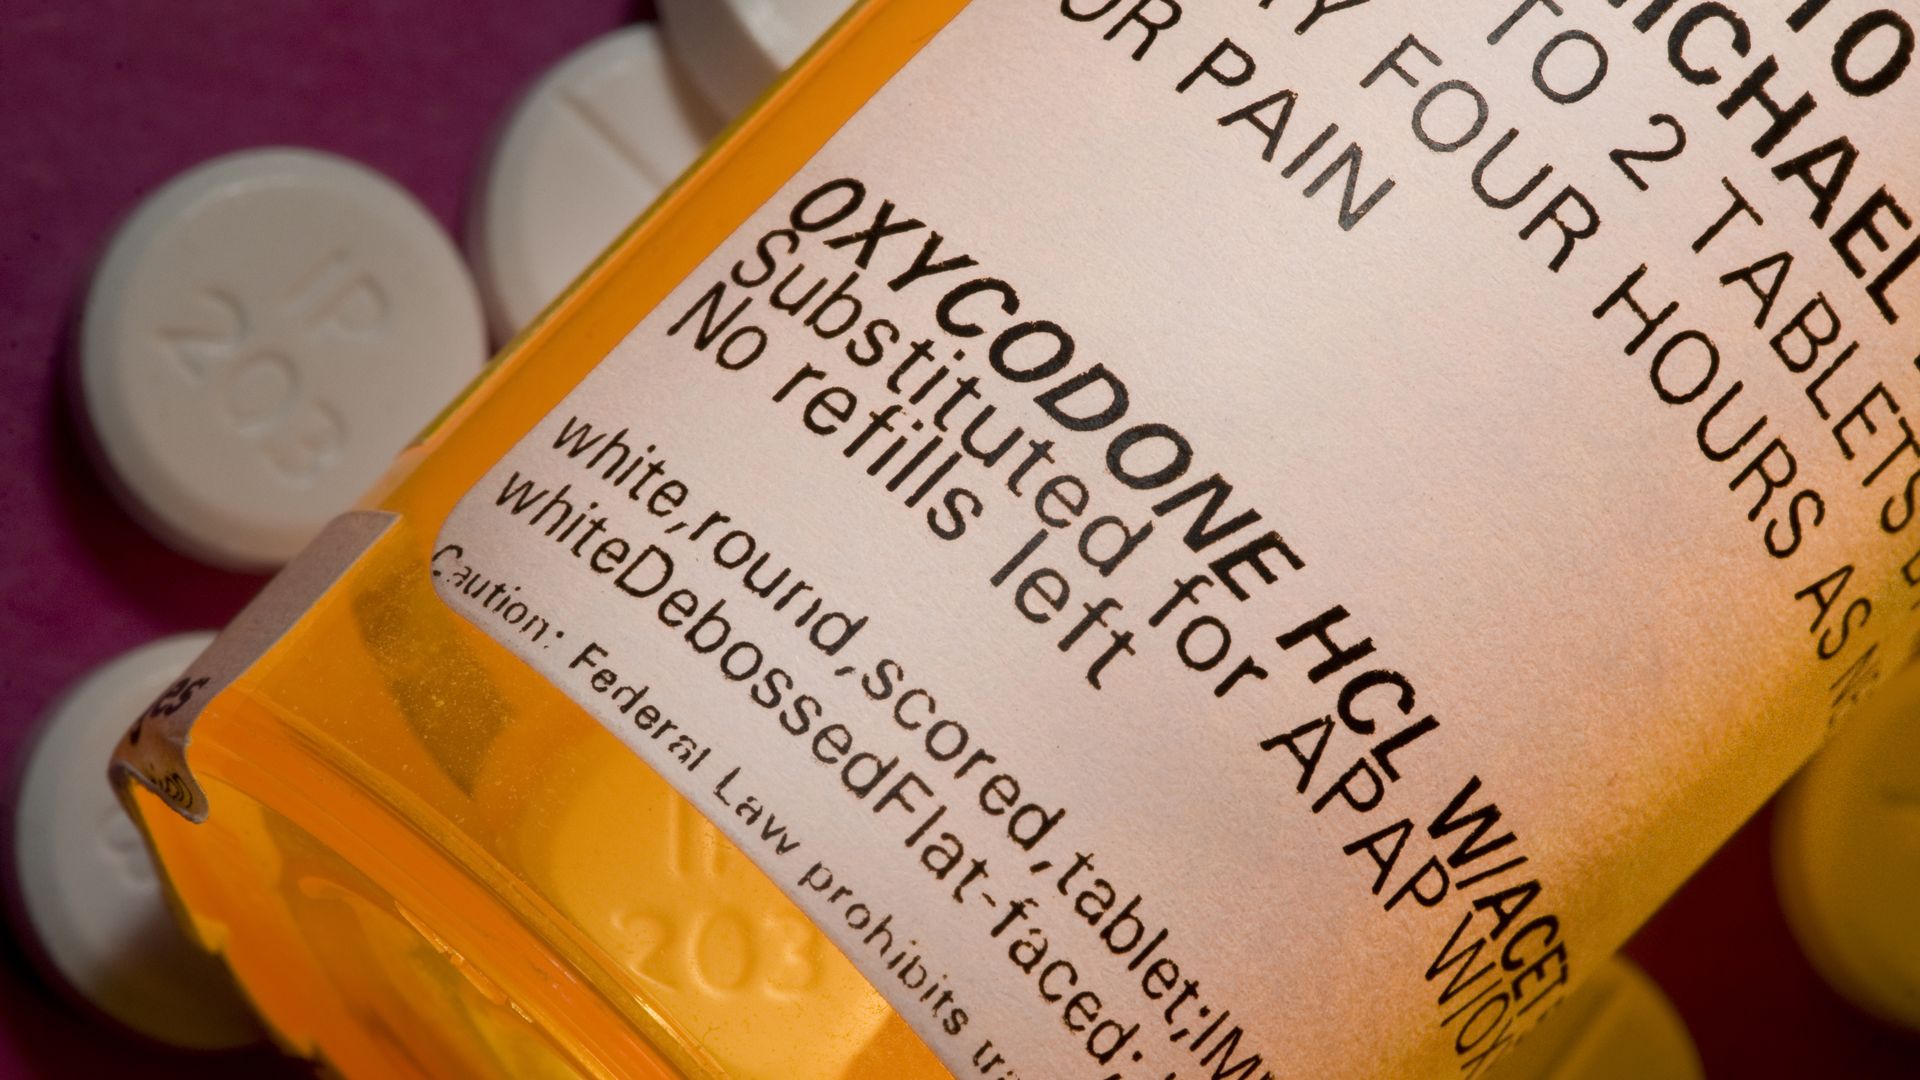 A prescription bottle for Oxycodone